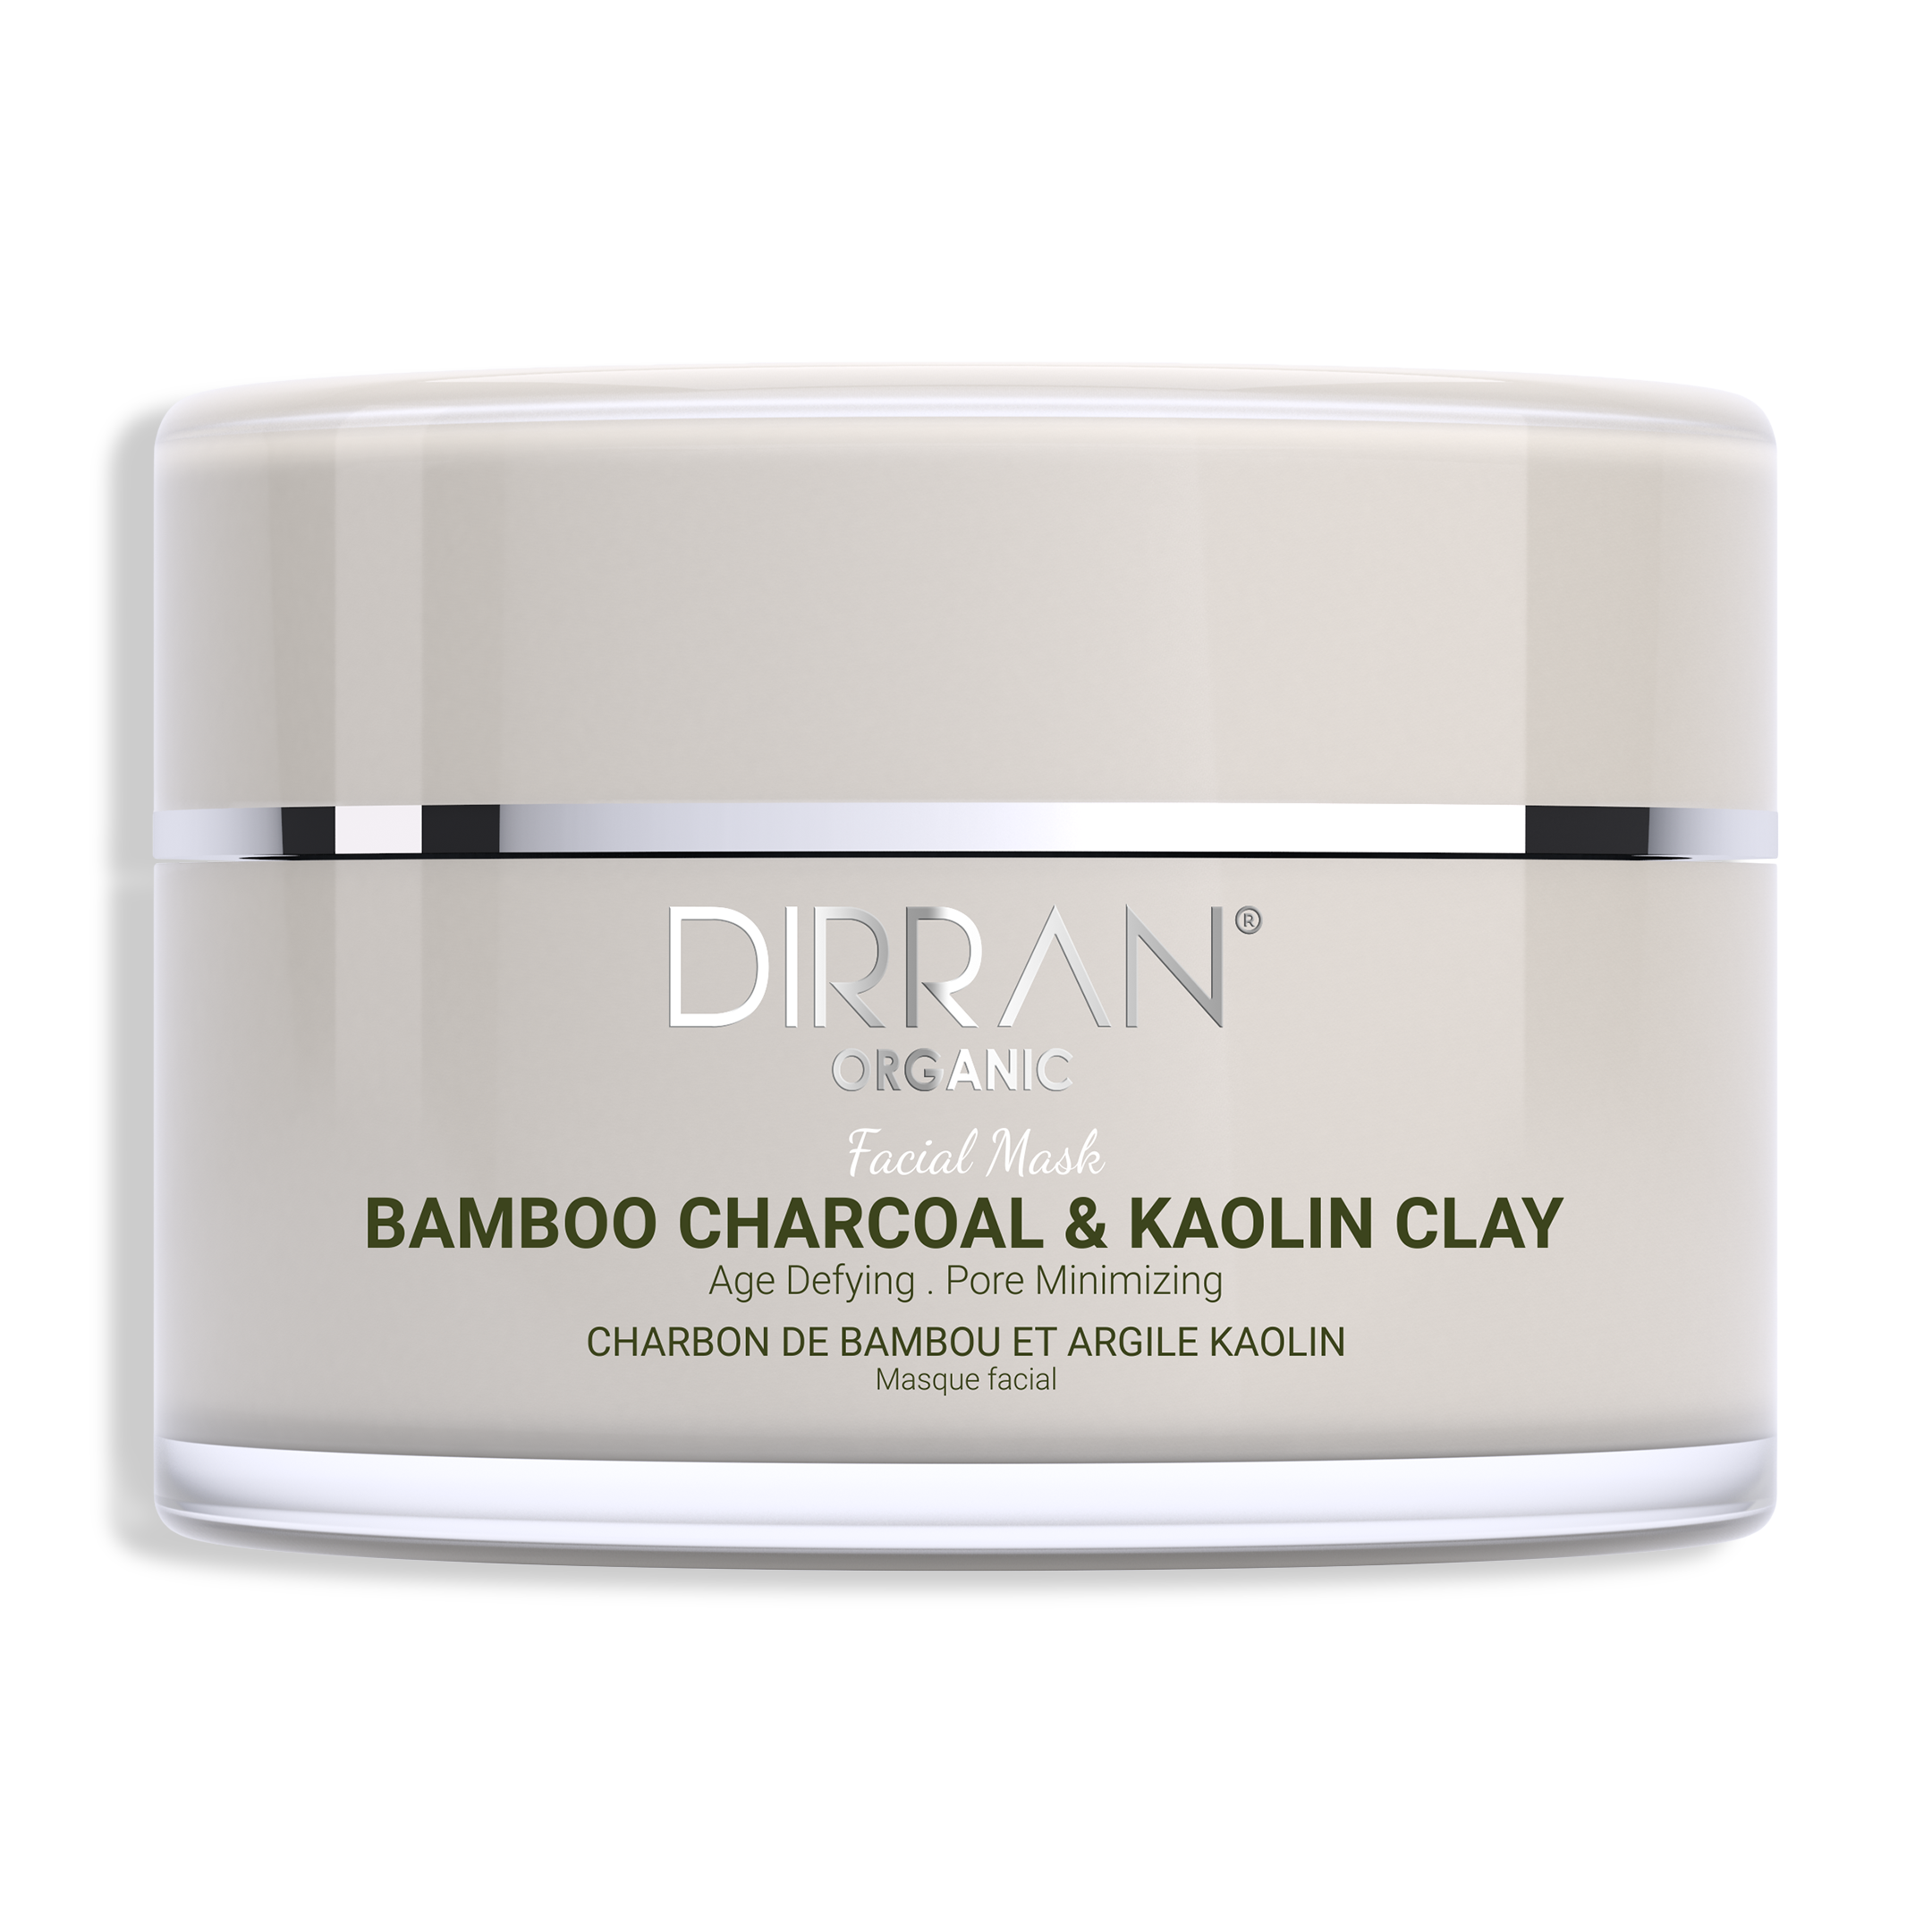 BAMBOO CHARCOAL & KAOLIN CLAY MASK Age Defying and Pore Minimizing